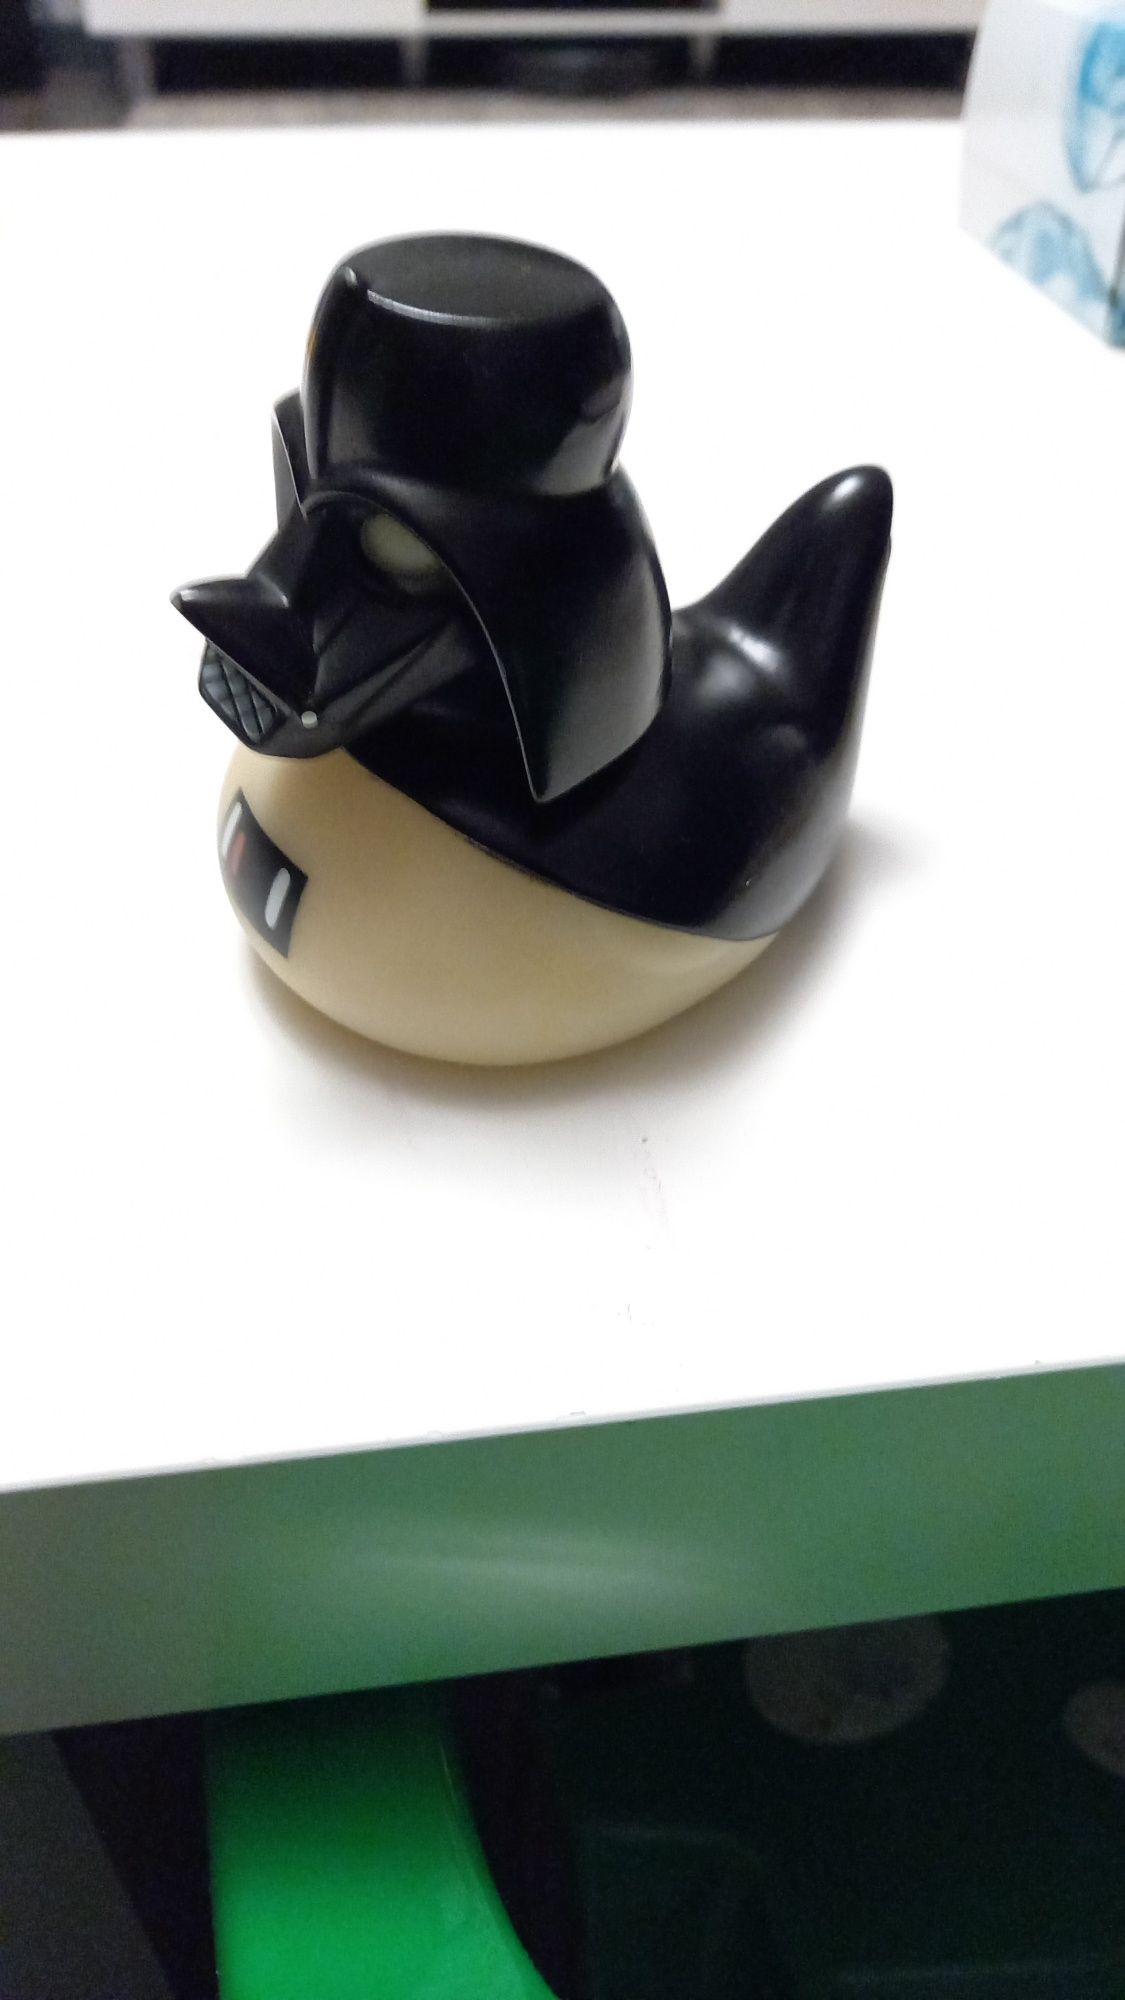 Lord Vader ze Star Wars - rubbber duck gumowa kaczka